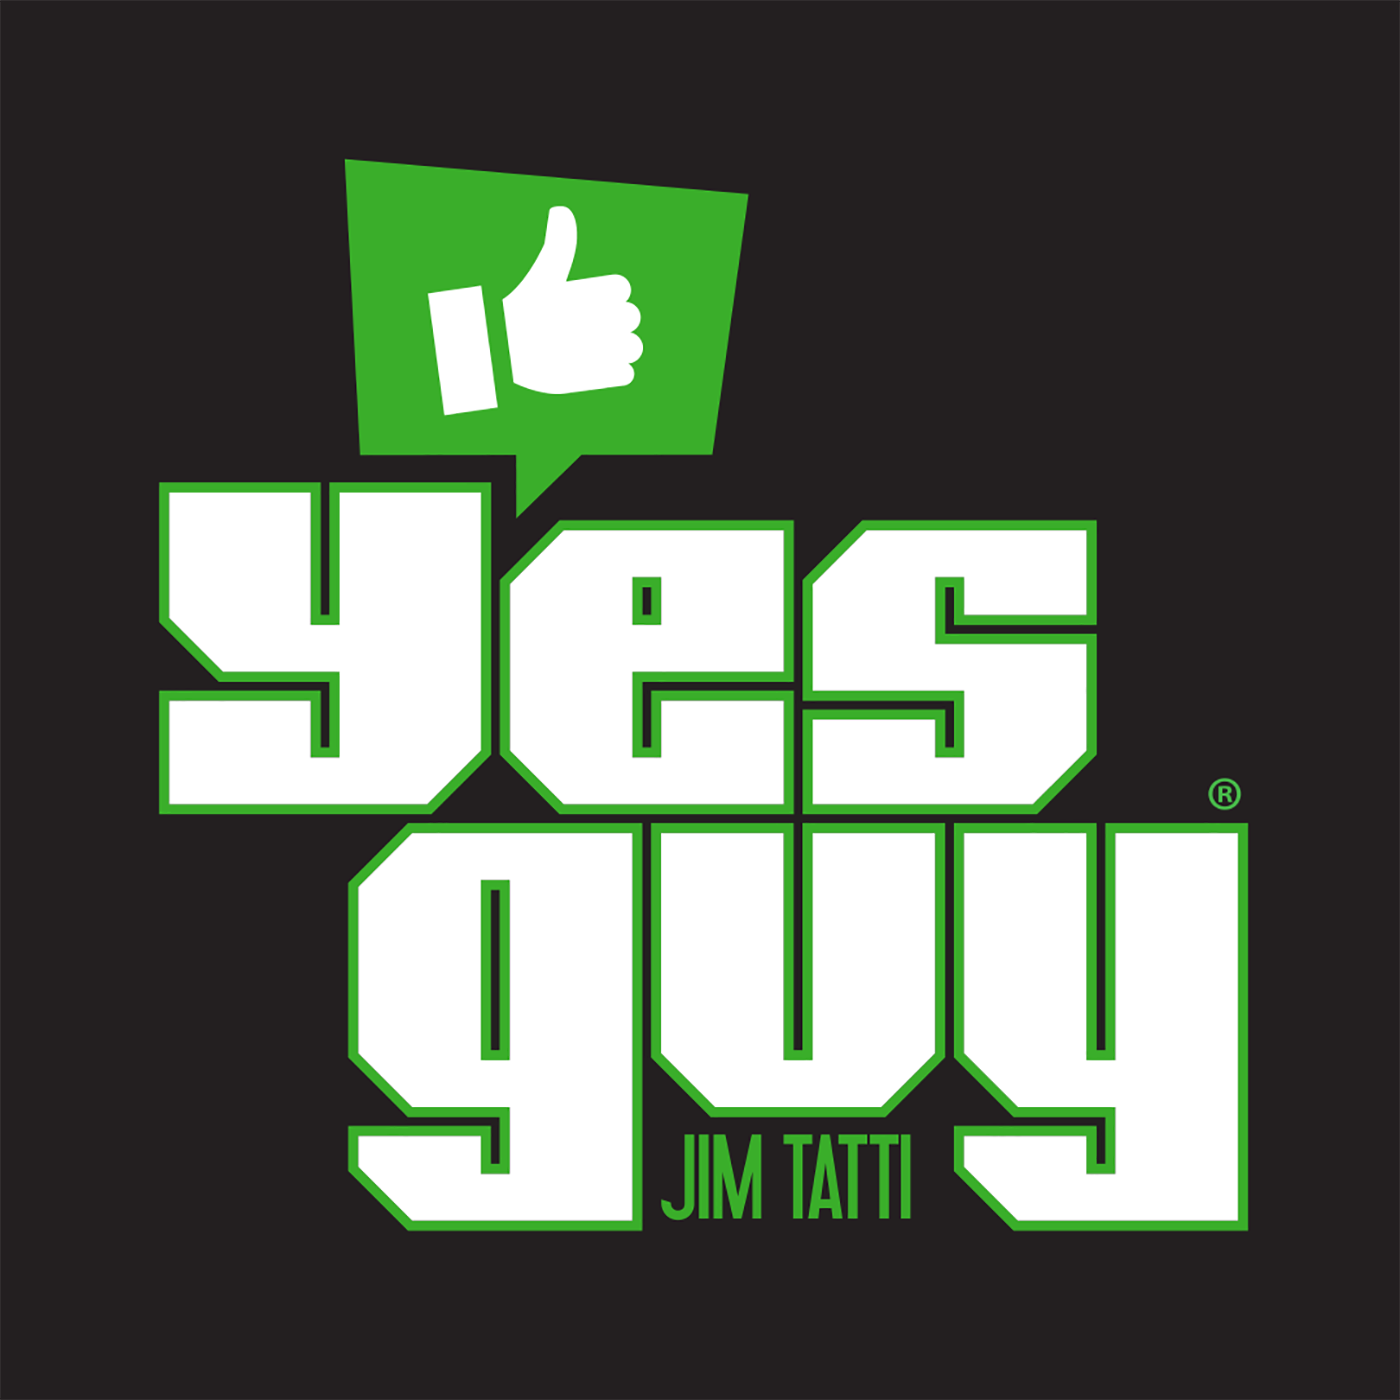 Yes Guy - April 5 - Episode 193